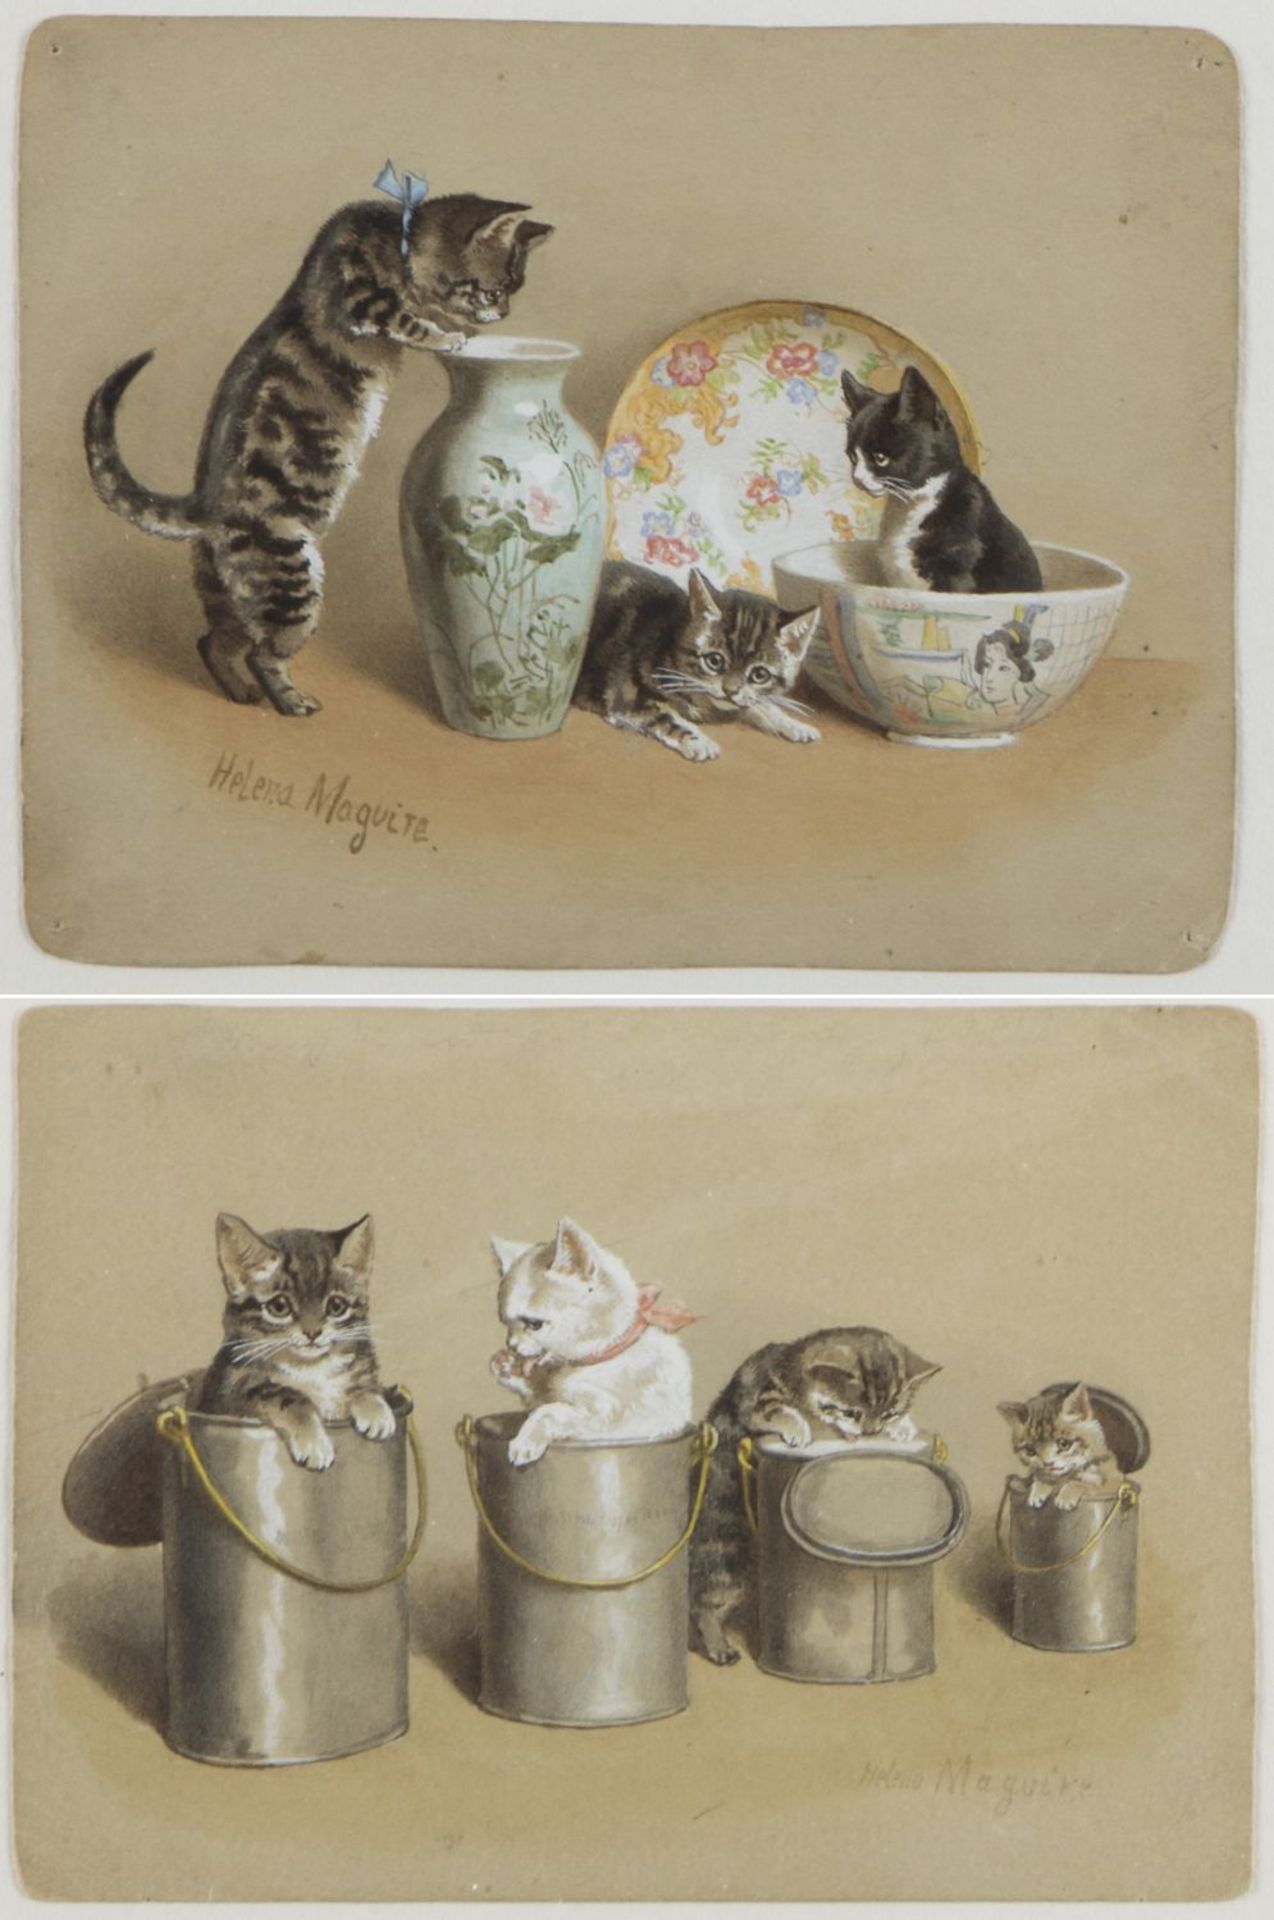 Maguire, Helena J. 1860 - 1909 Spielende Katzen mit Porzellan. Spielende Katzen in Eimern. 2 Gouach